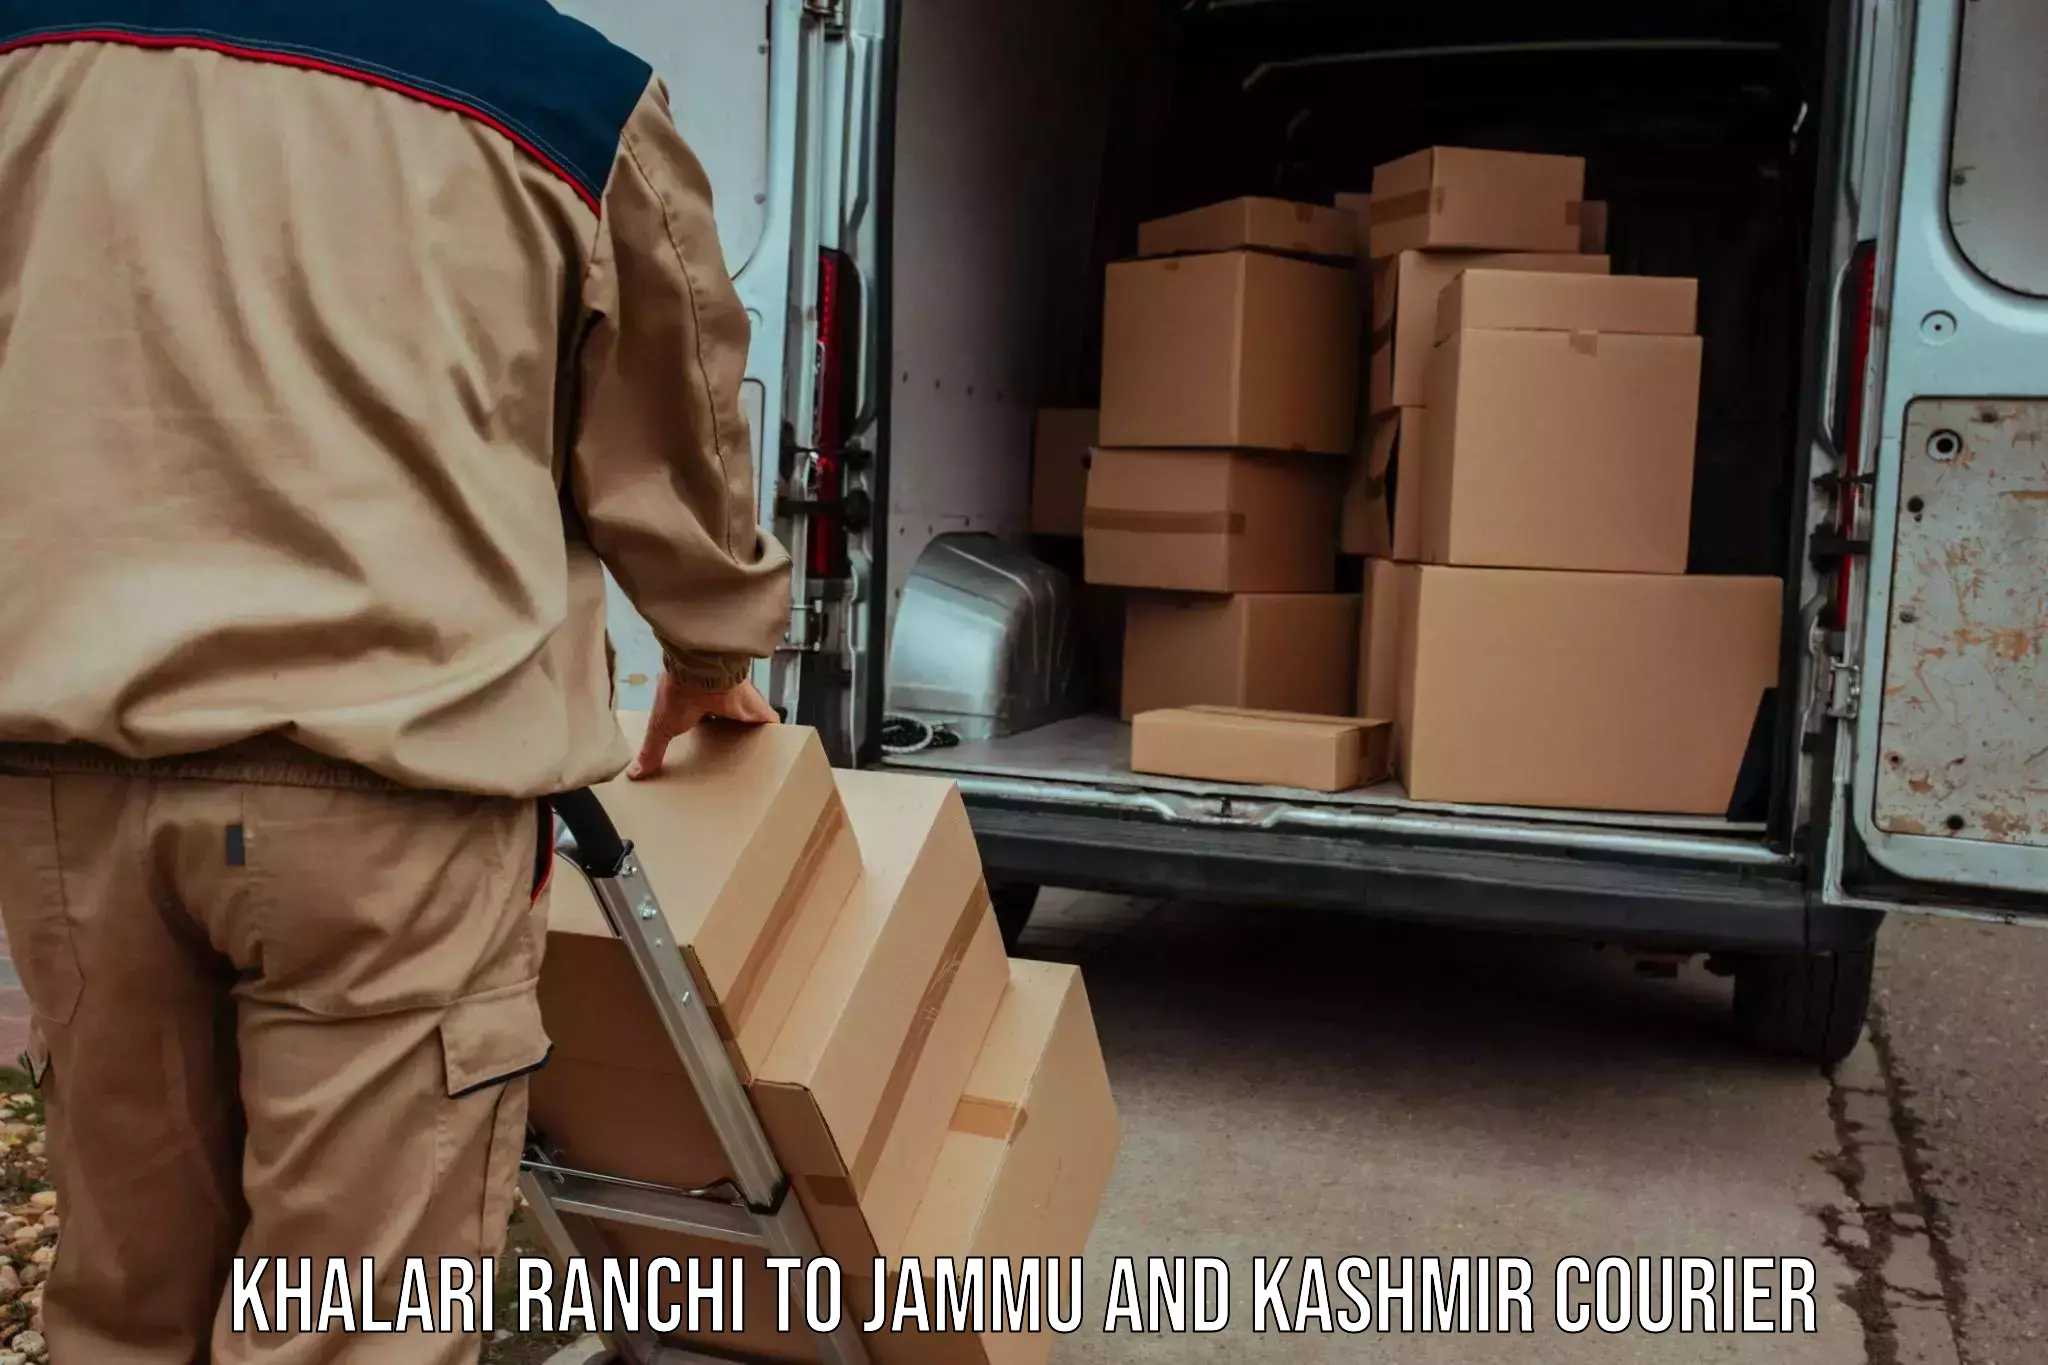 Full-service courier options Khalari Ranchi to Rajouri